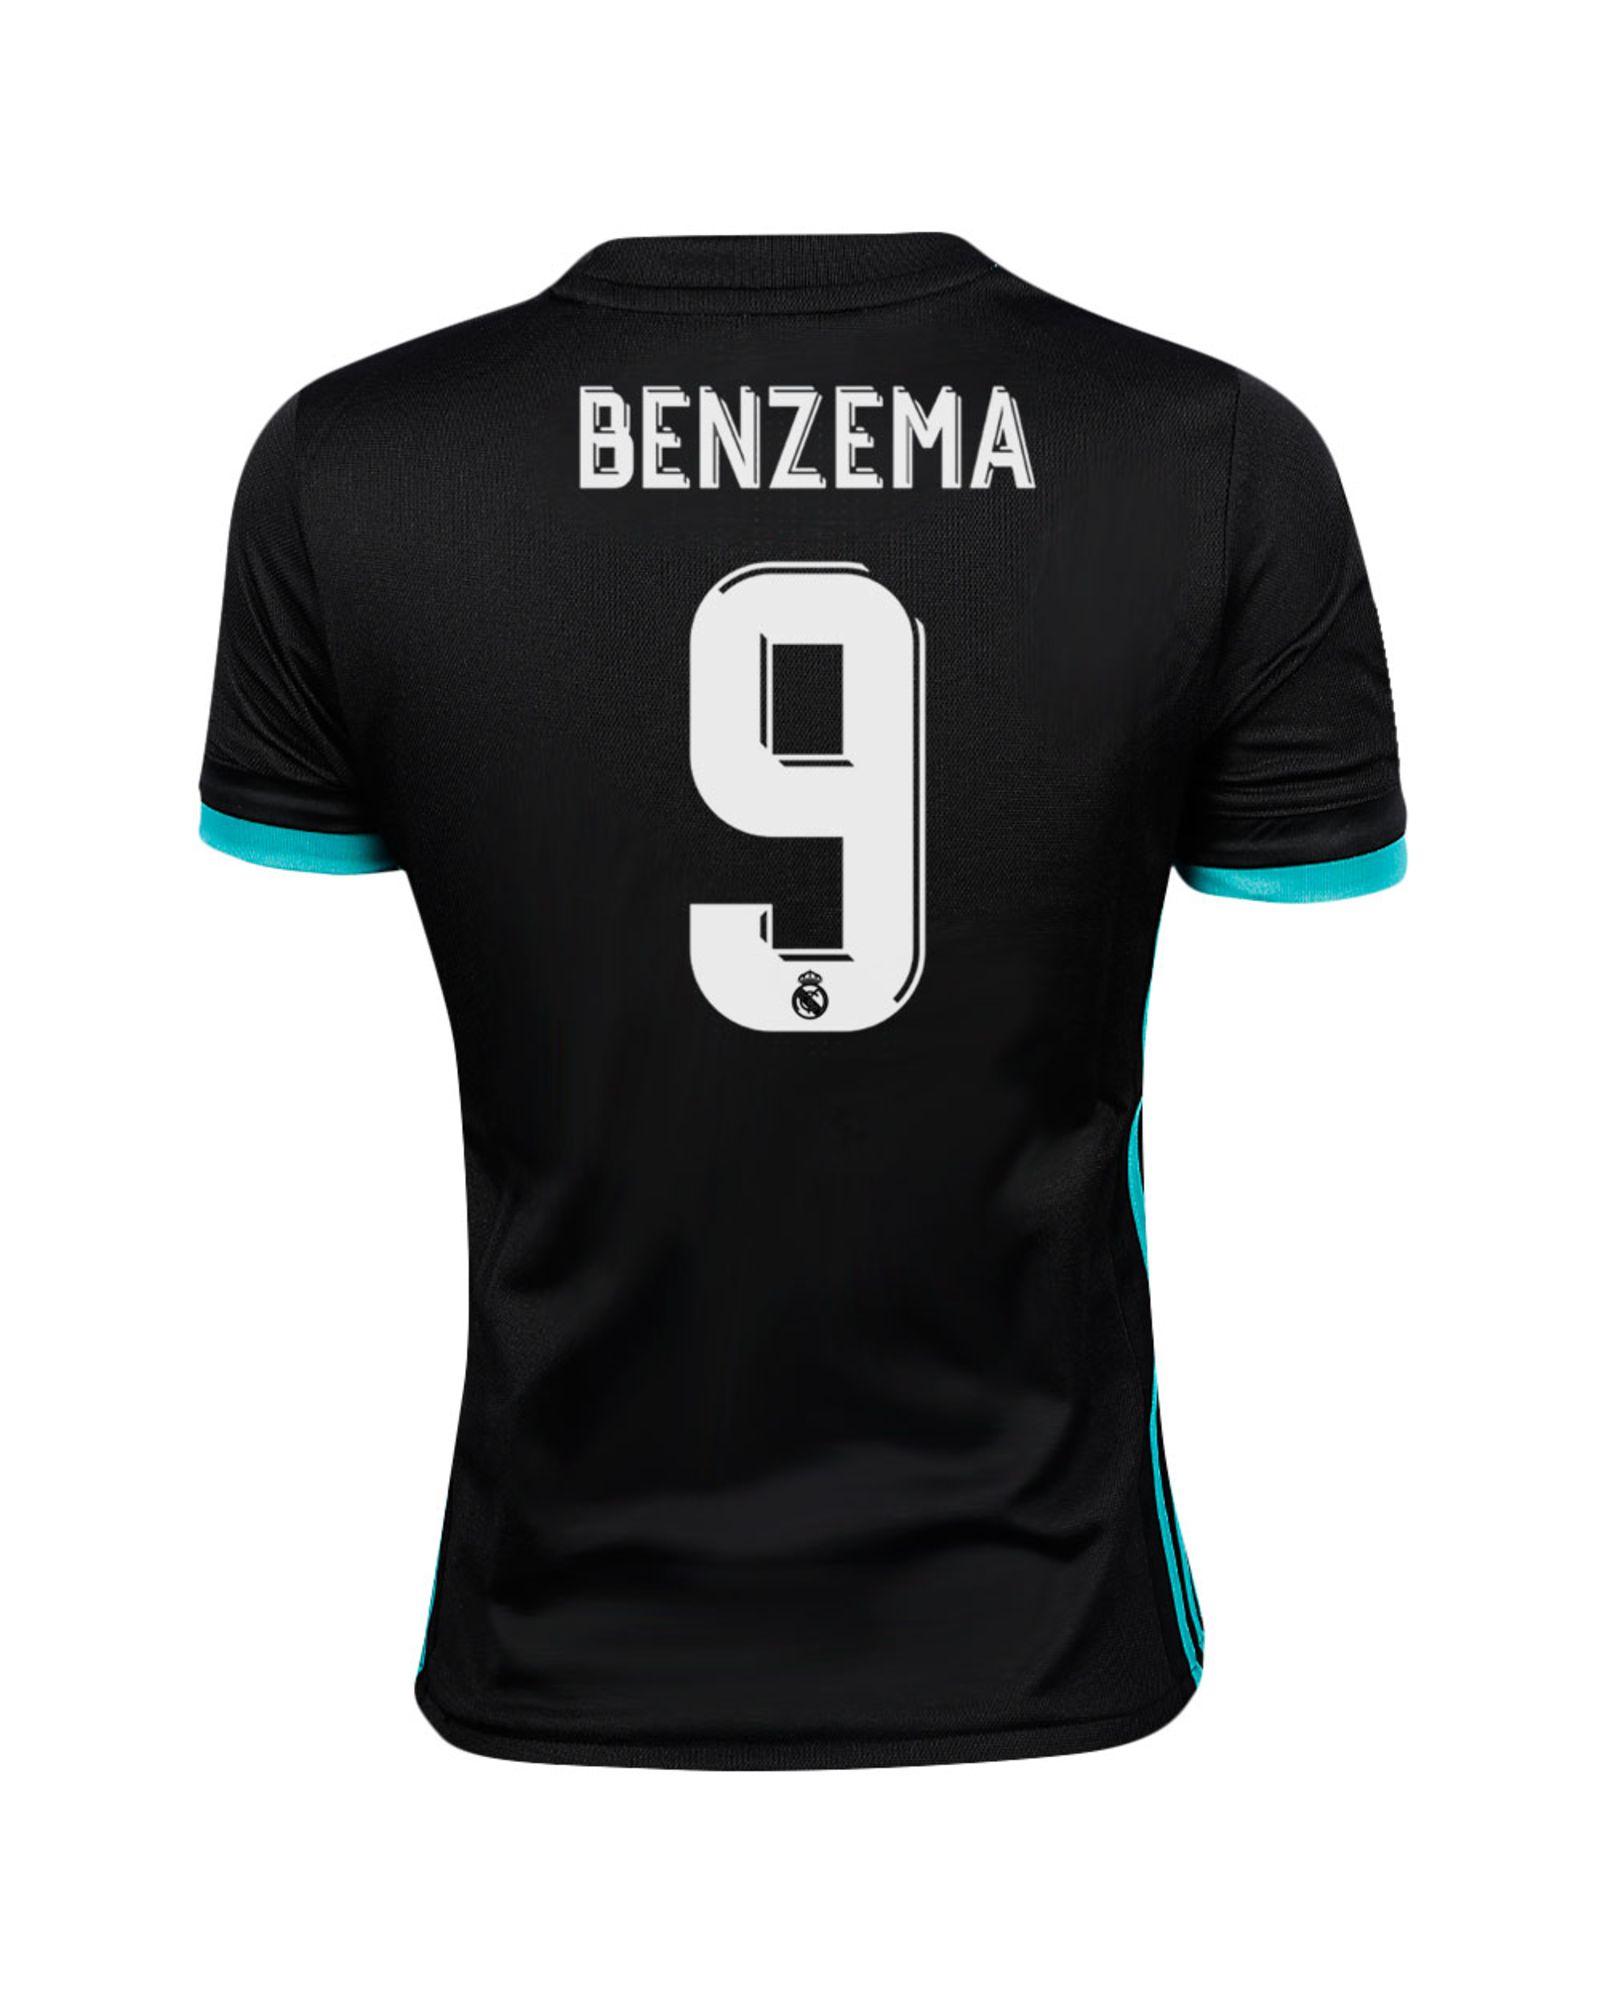 Camiseta 2ª Real Madrid 2017/2018 Benzema Junior Negro - Fútbol Factory